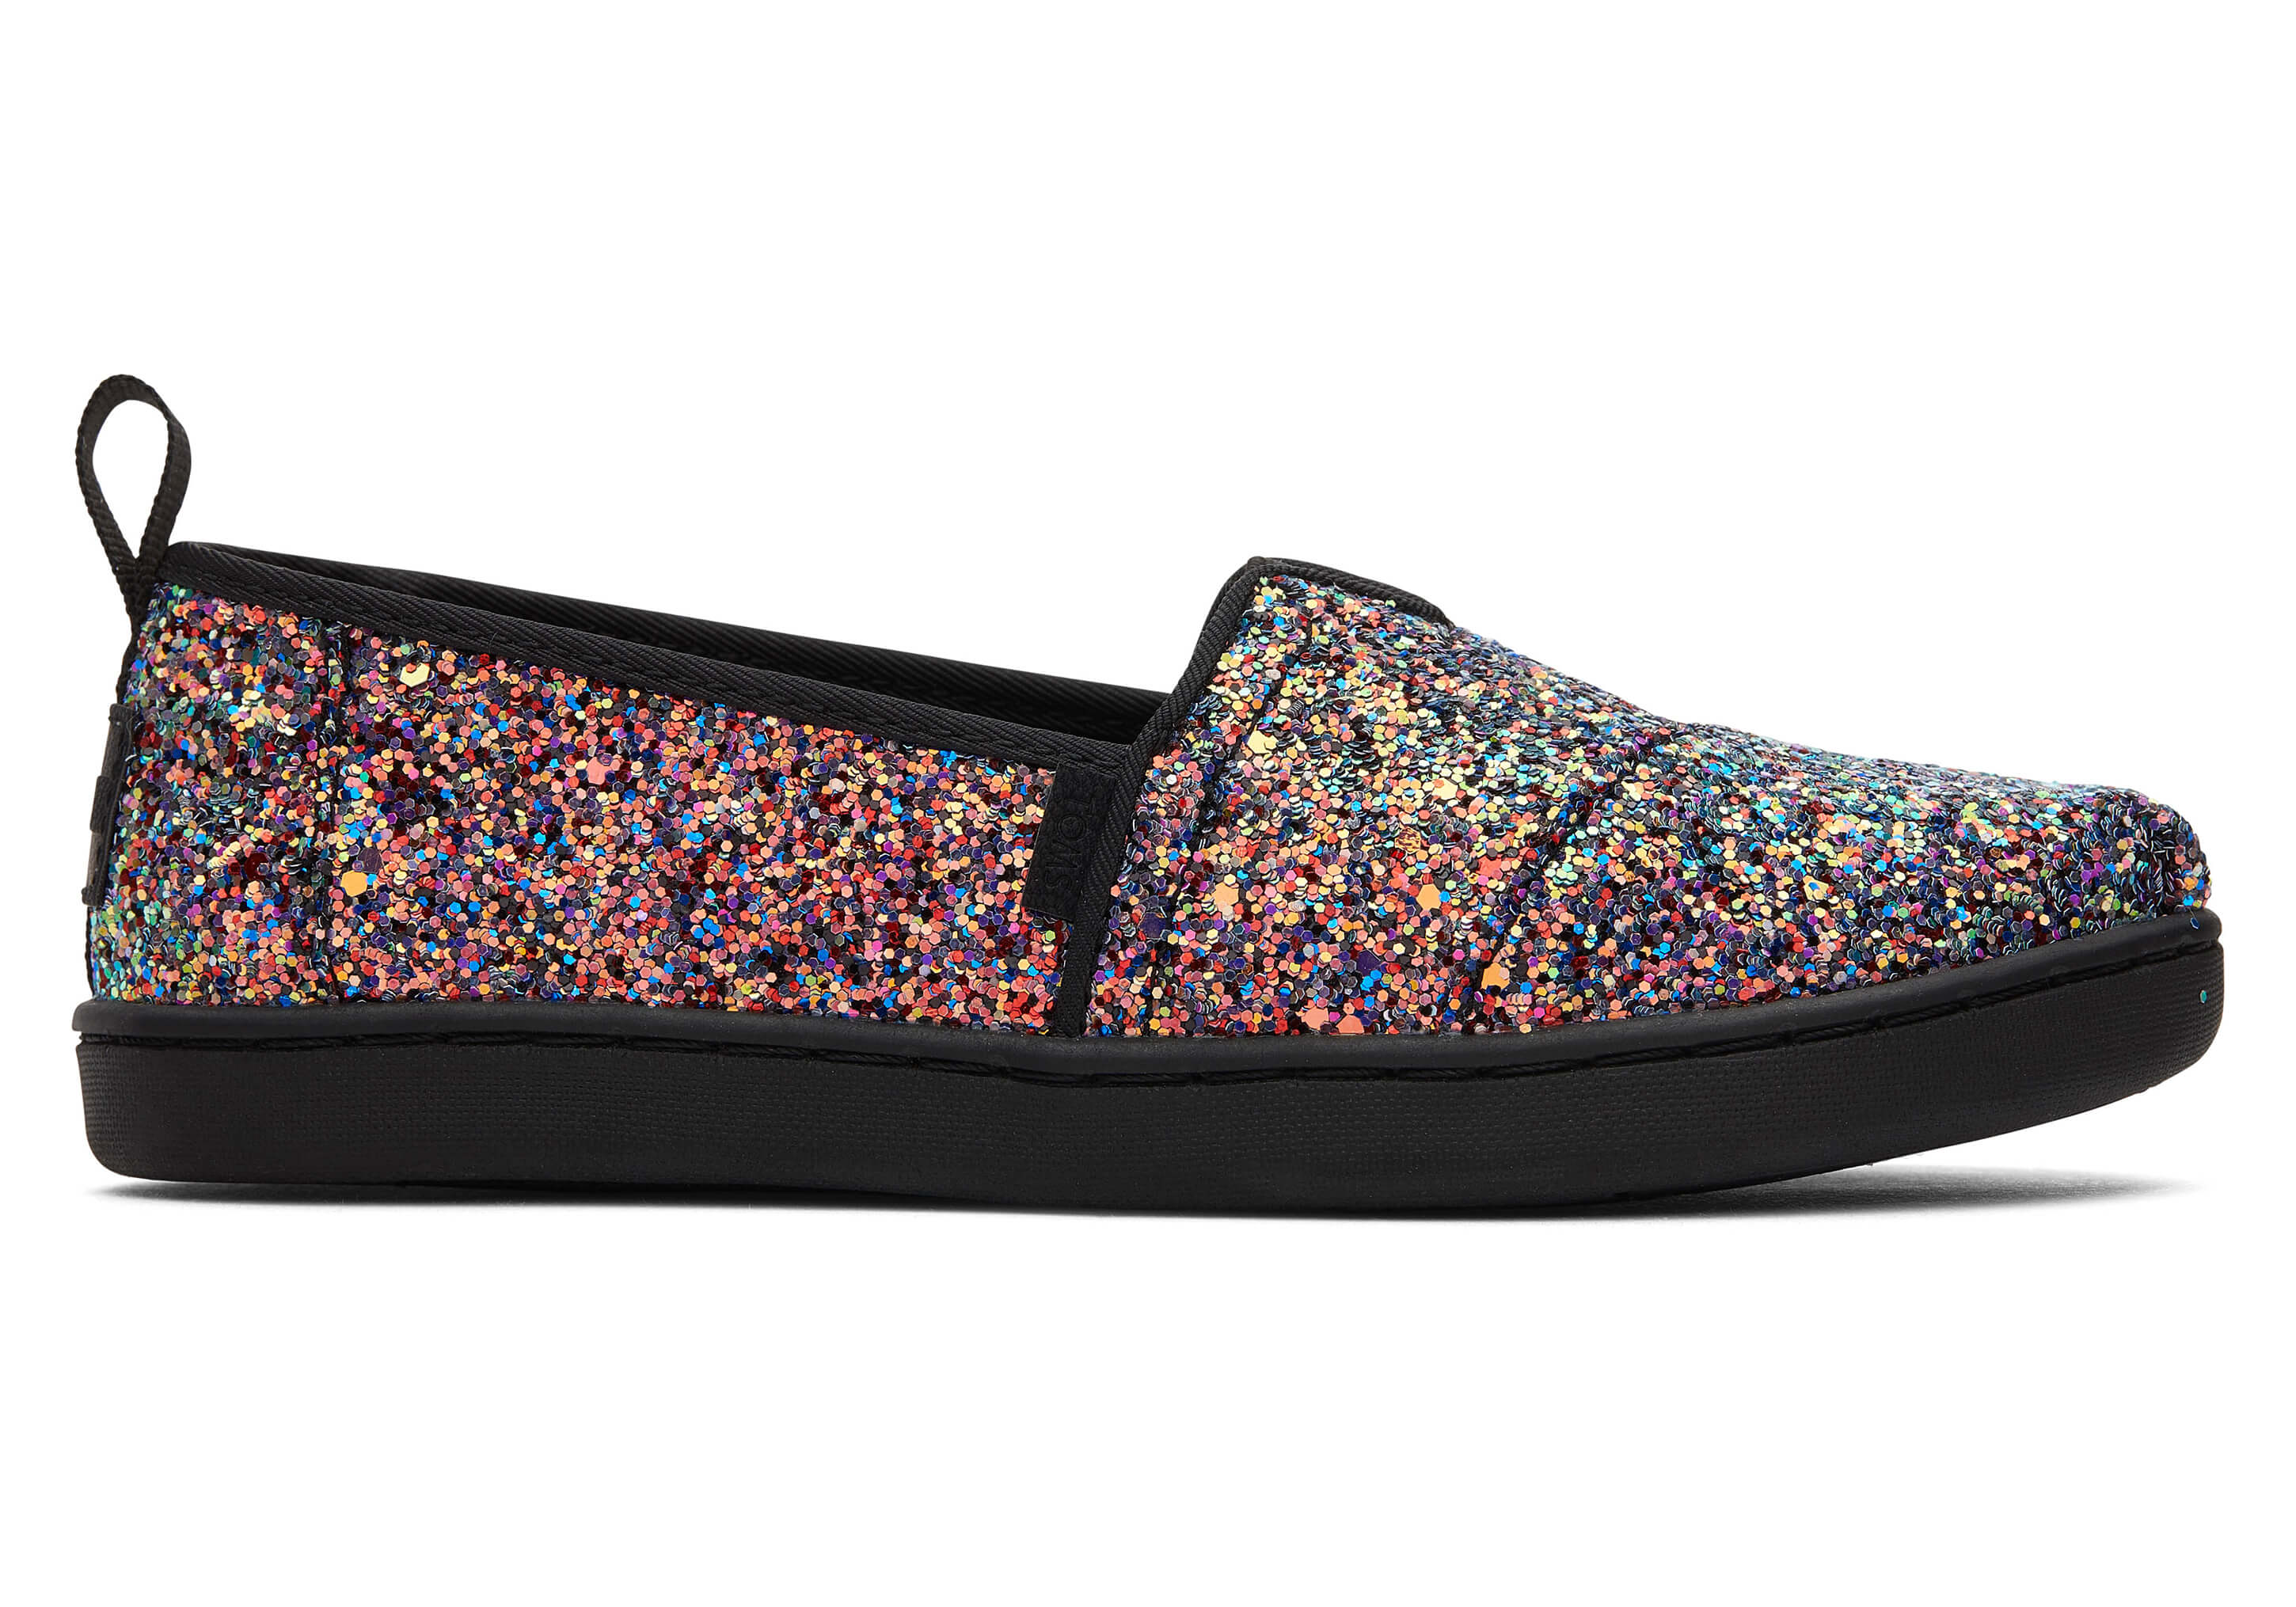 Toms Women's Shoes - Alpargata Glitter - Black Cosmic - Surf and Dirt